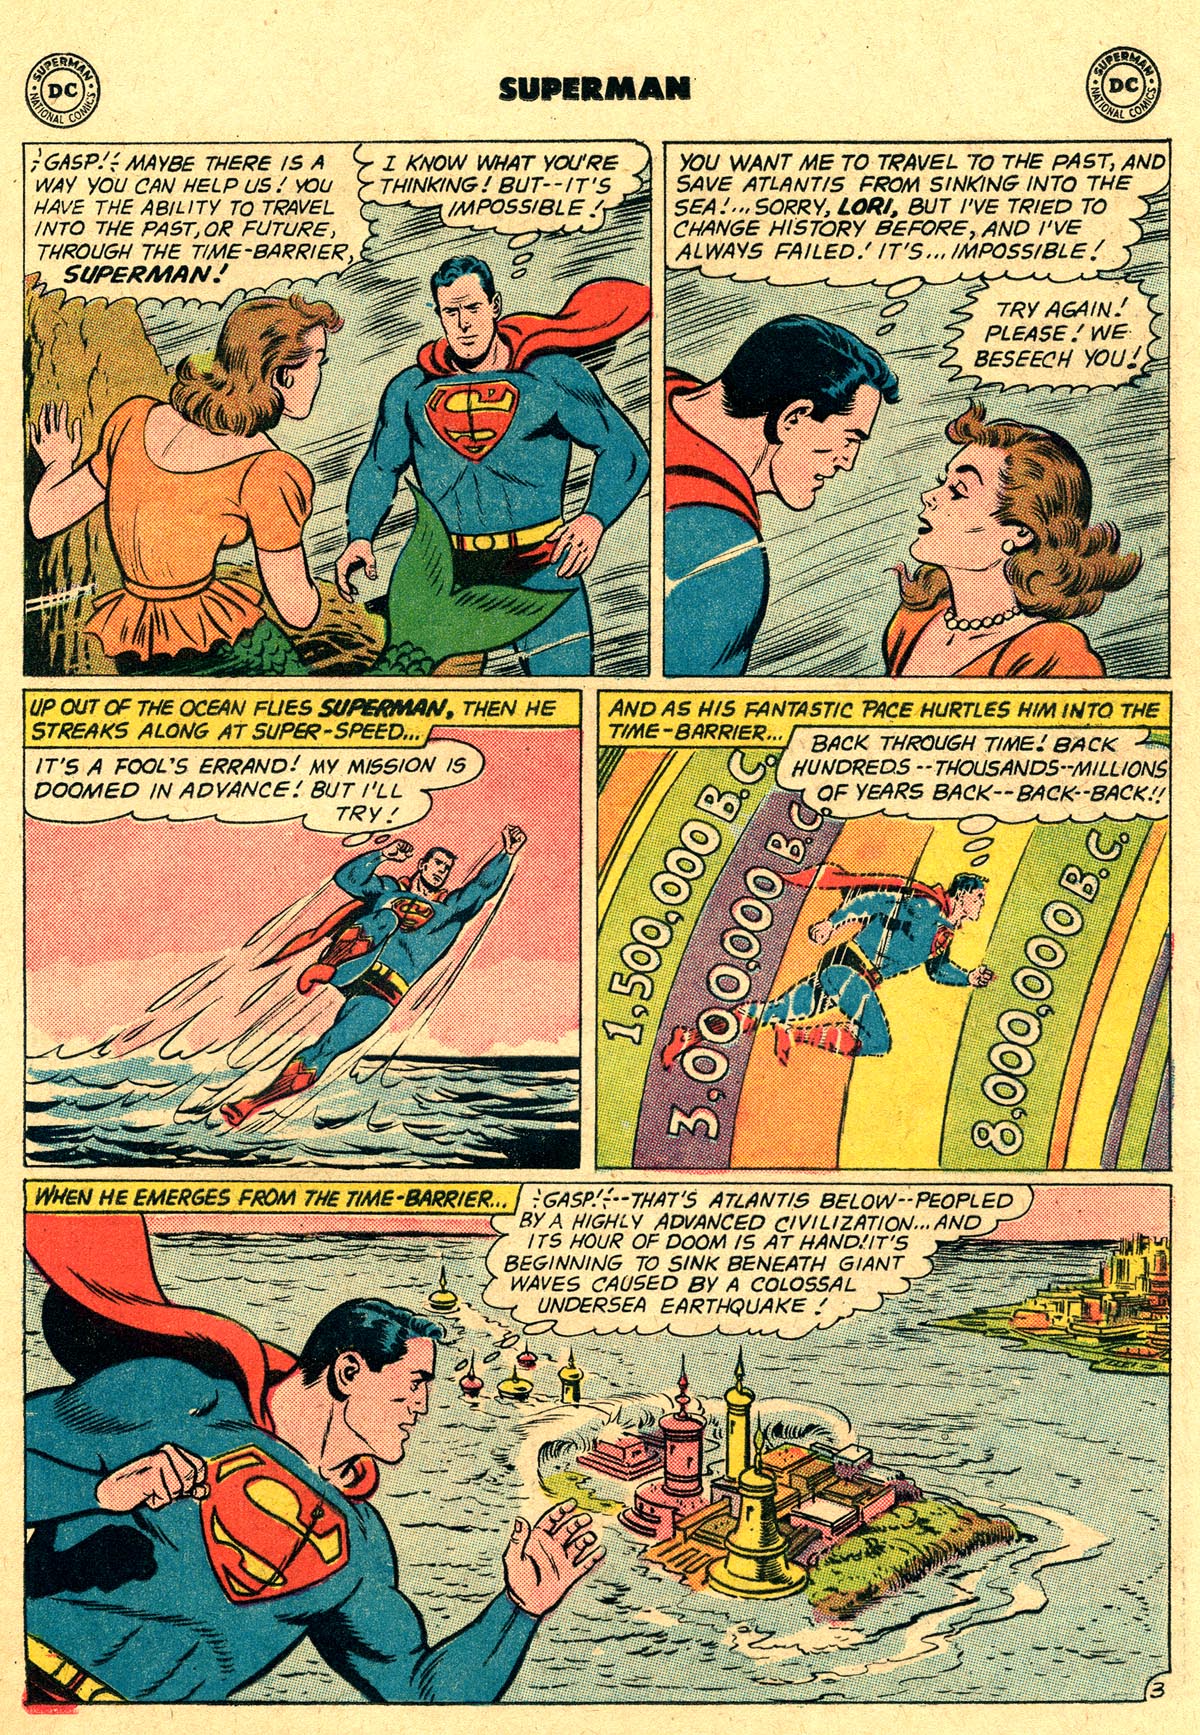 Superman speed up. Superman Speed. Pre crisis Superman. Супермен до кризиса комиксы. Superman Comics 1939.